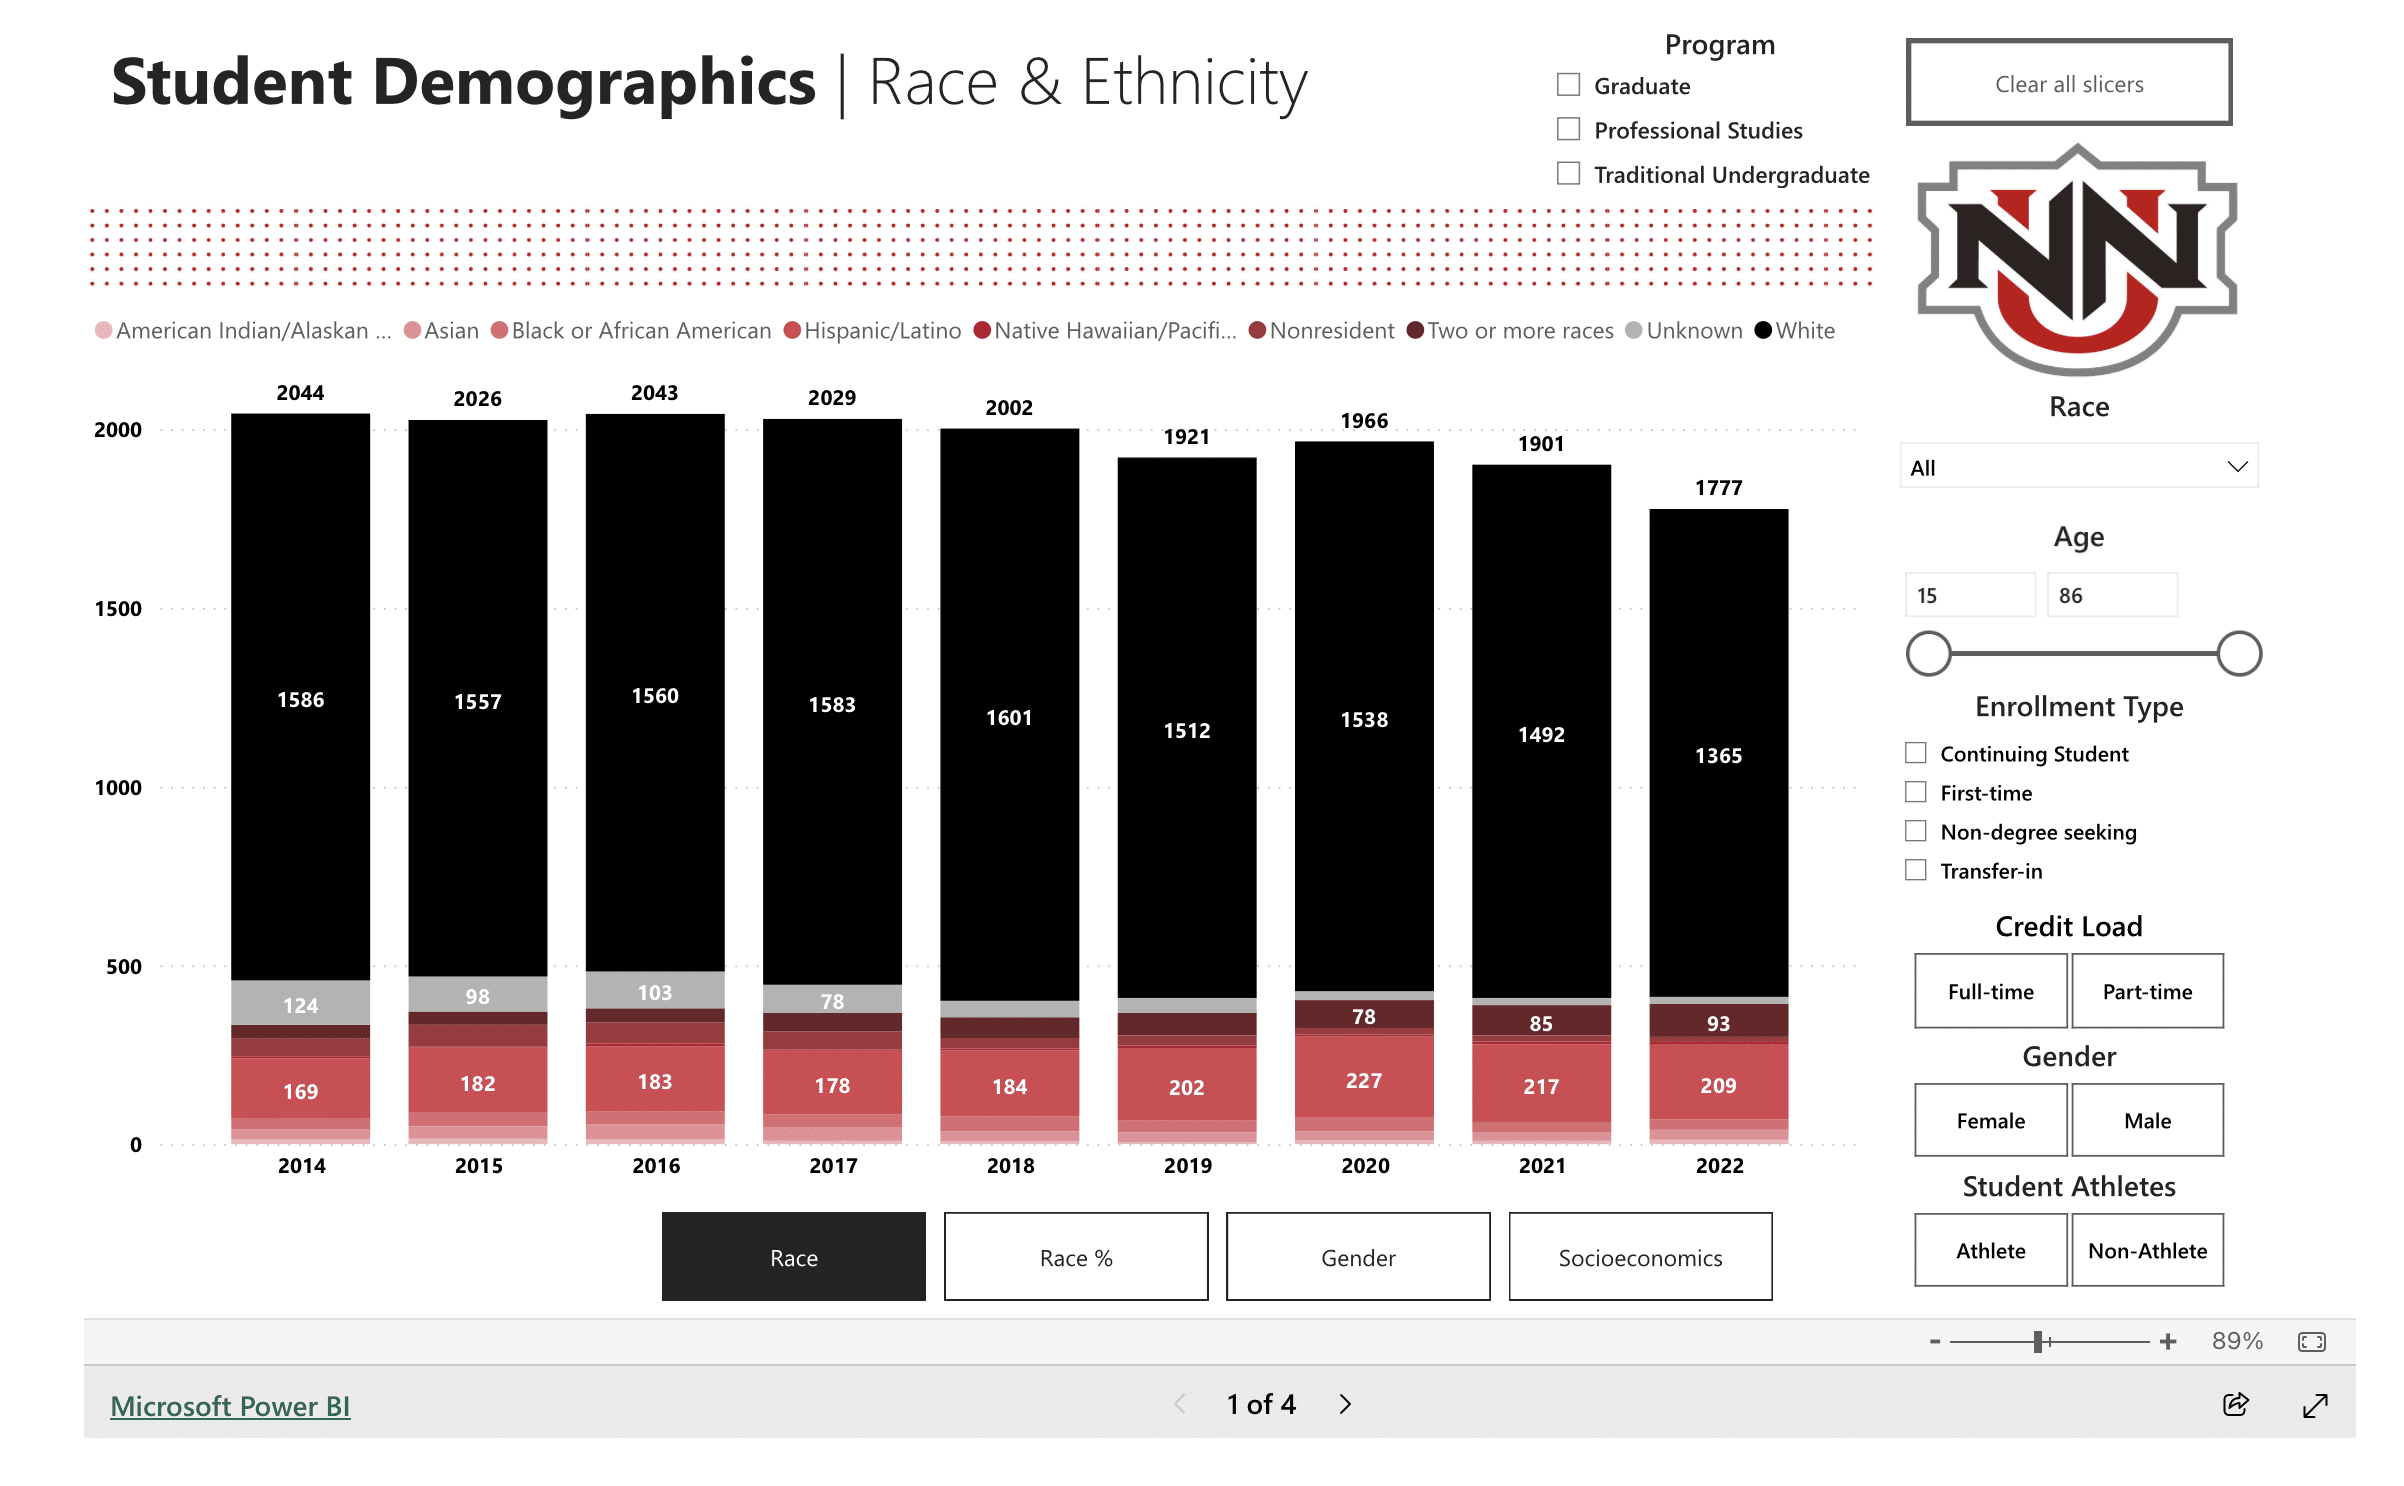 Student Demographic data